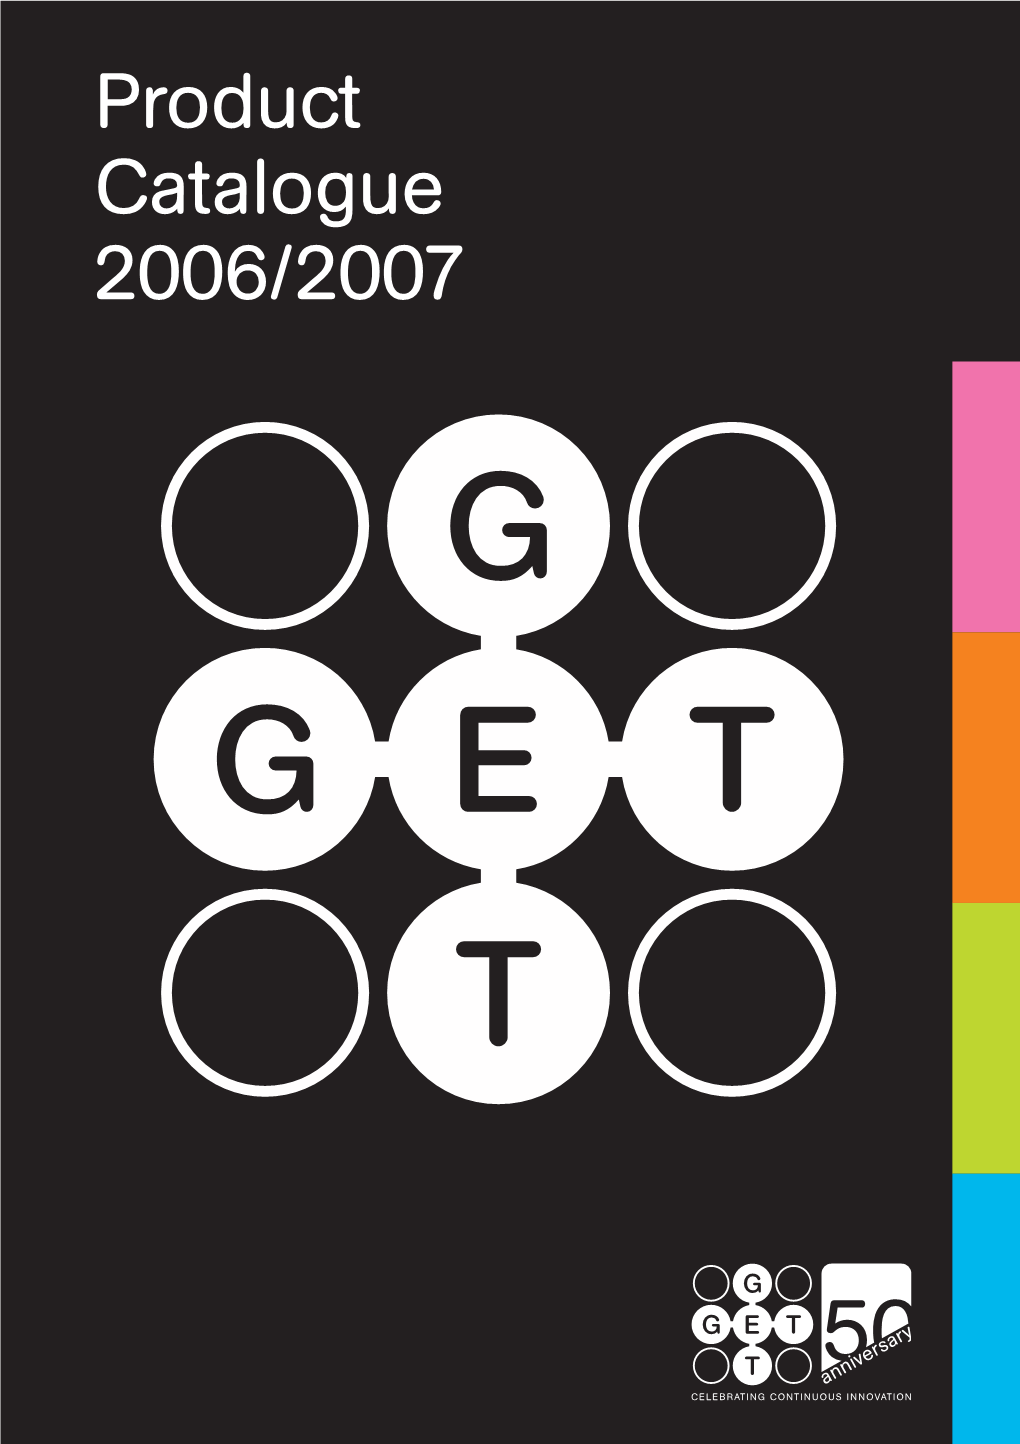 Product Catalogue 2006/2007